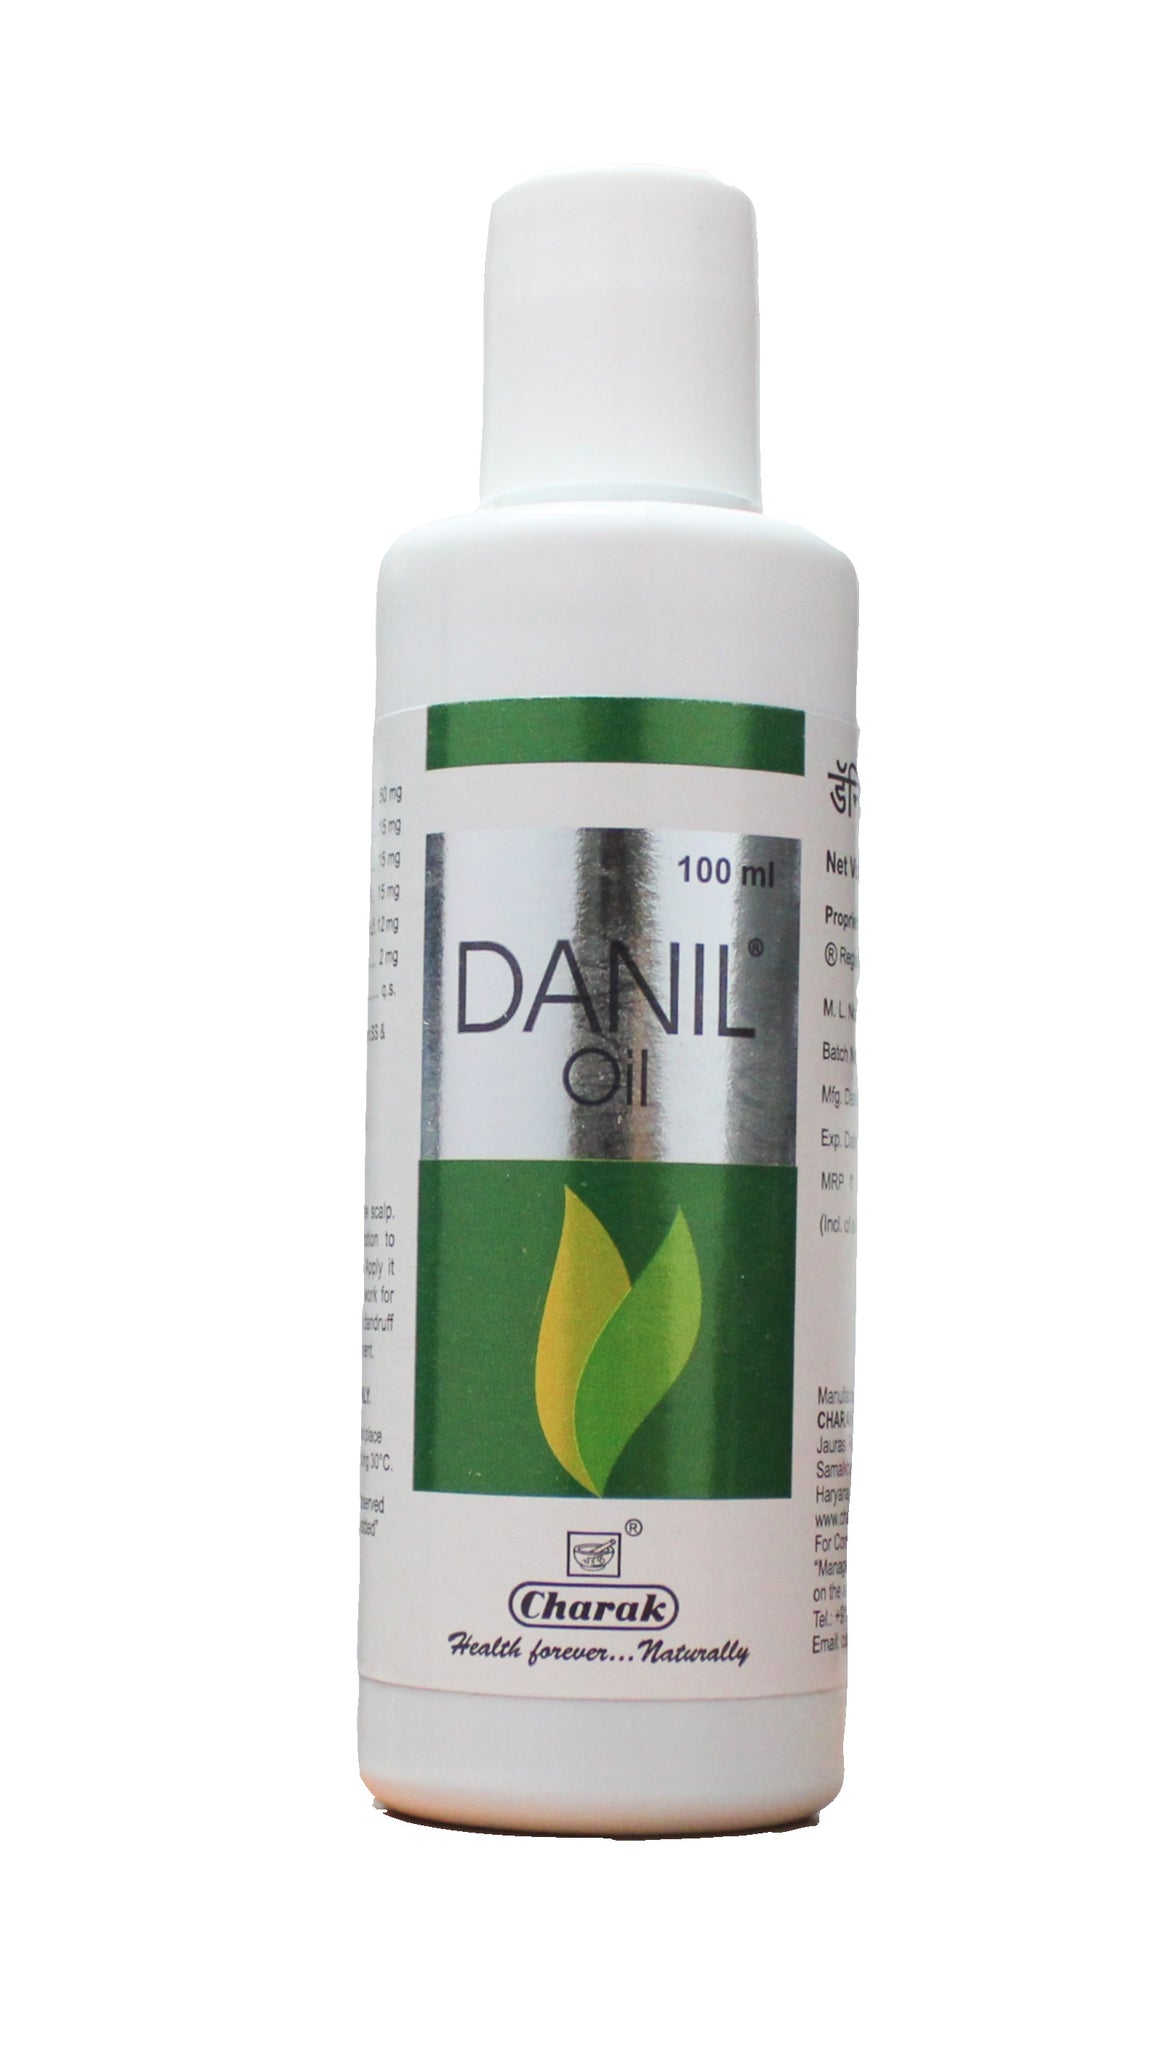 Danil anti dandrull hair oil 100ml Charak